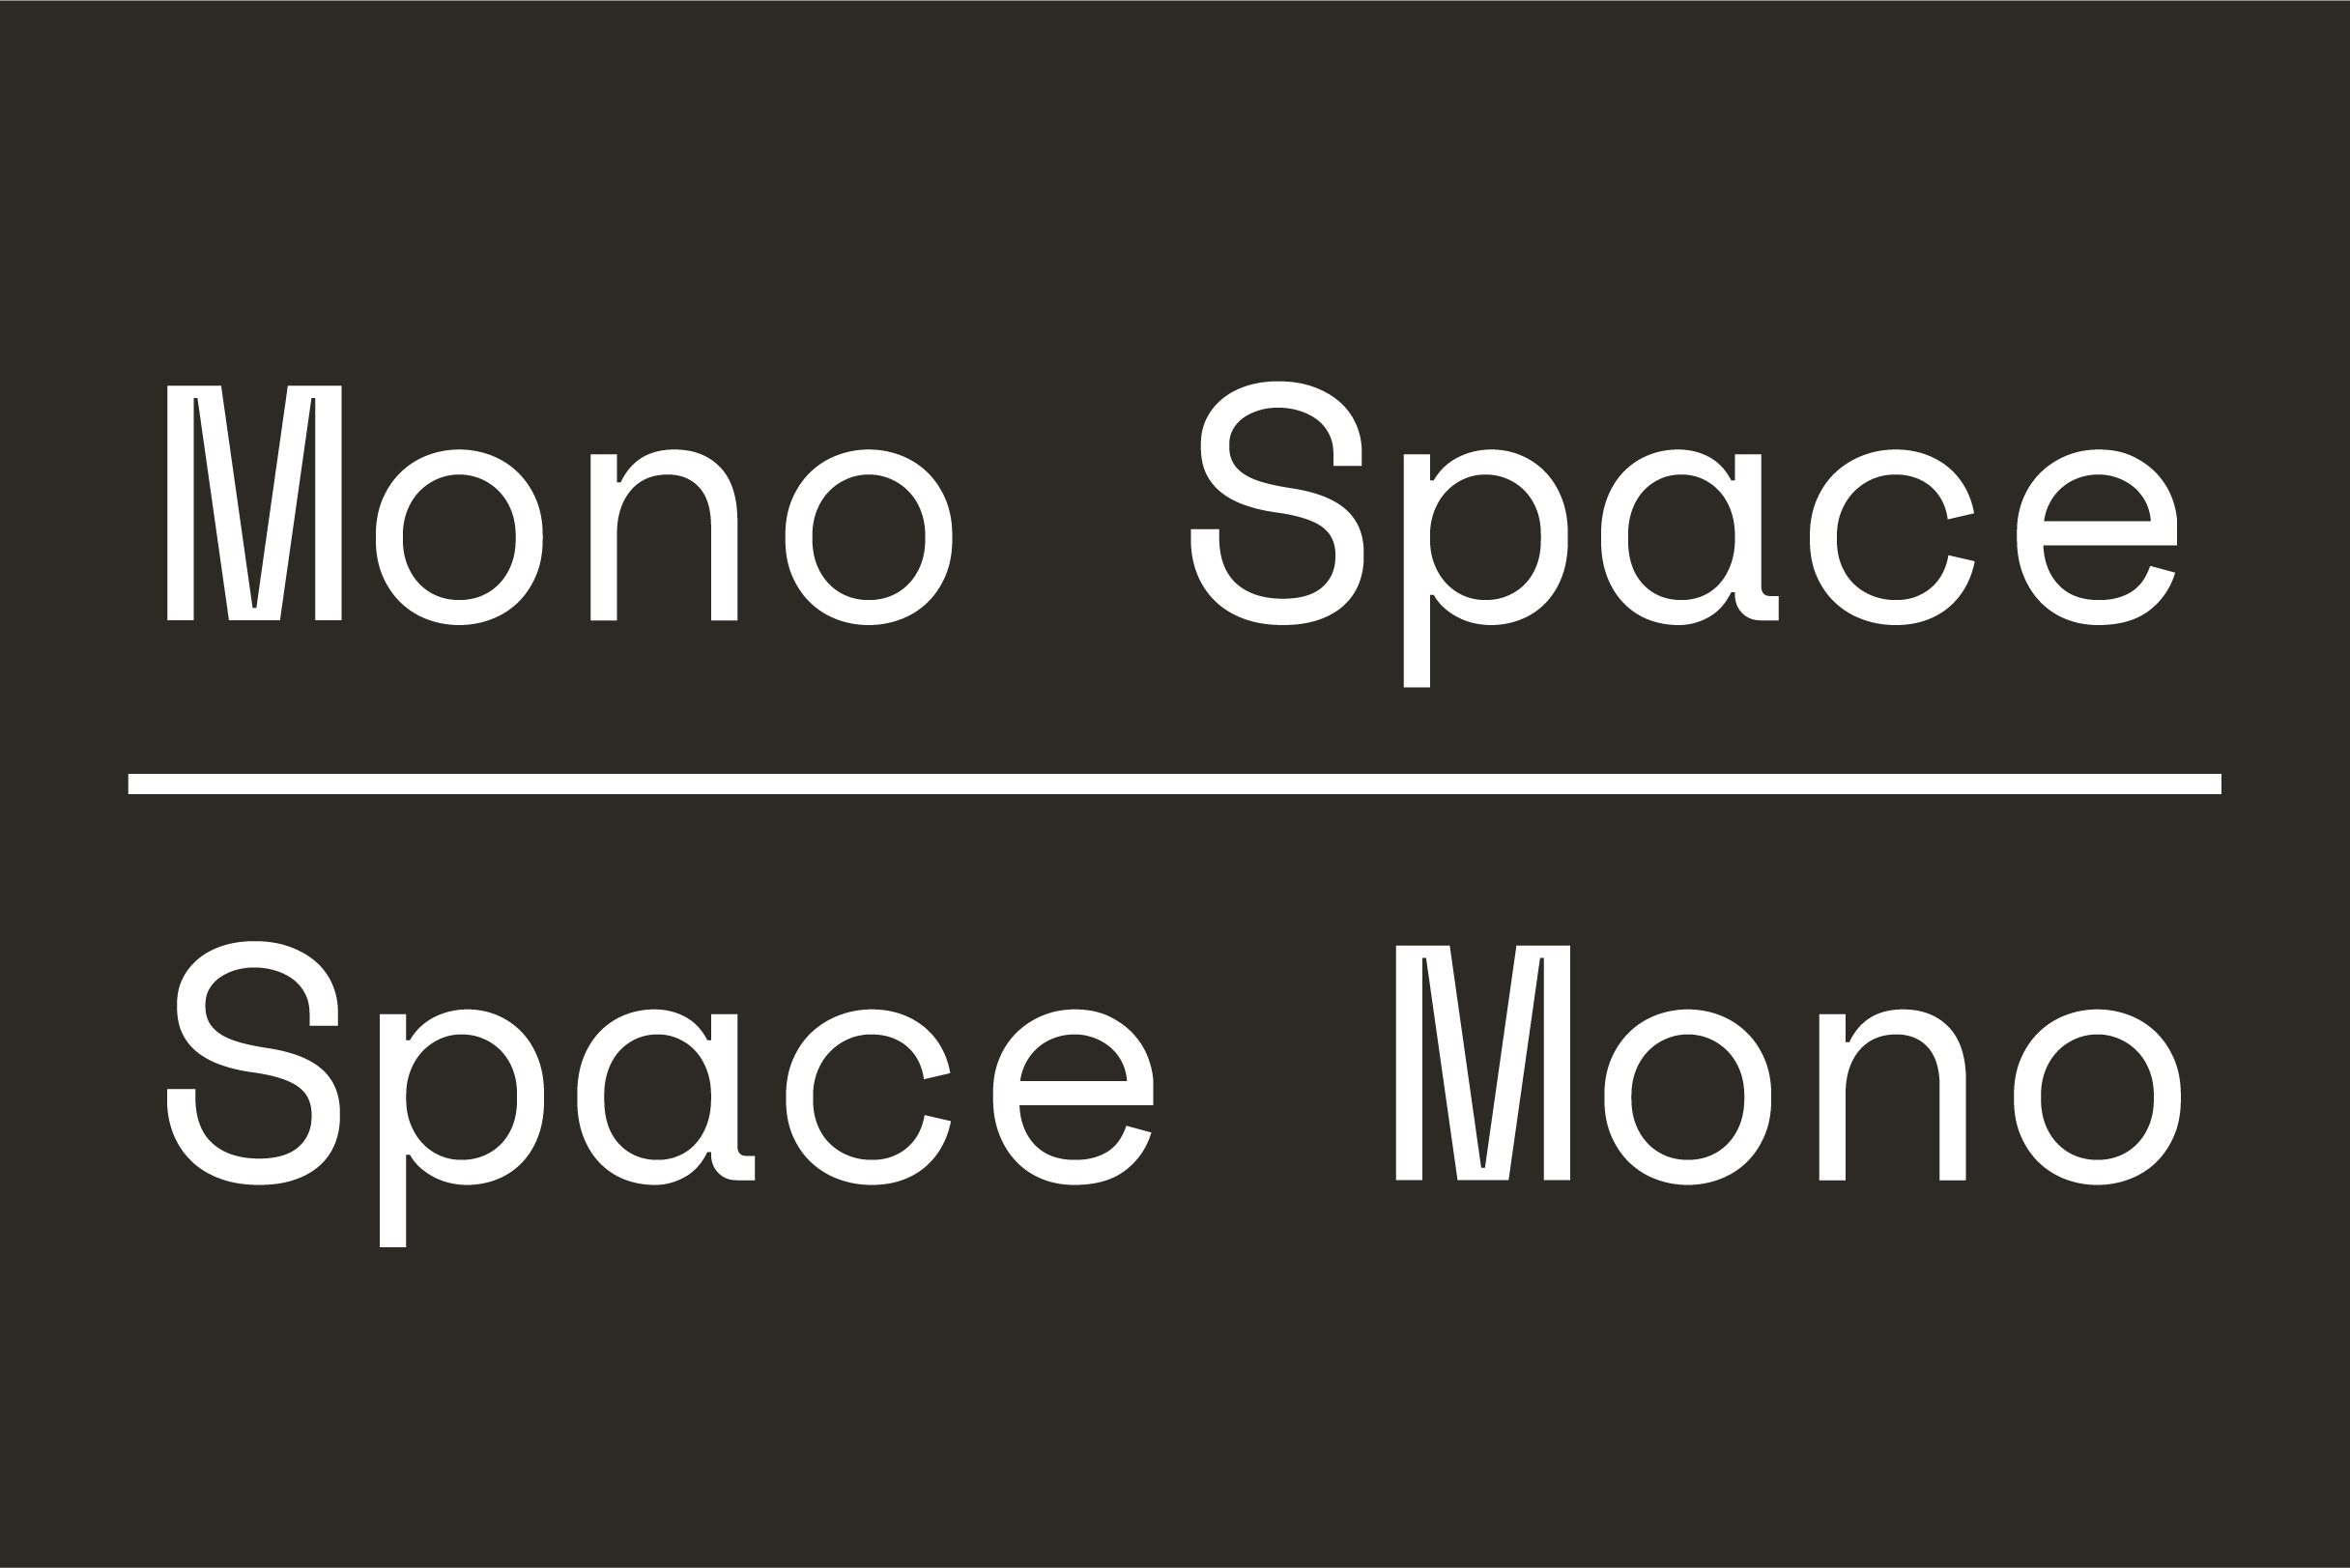 TILE_SPACE_MONO_3x2.png